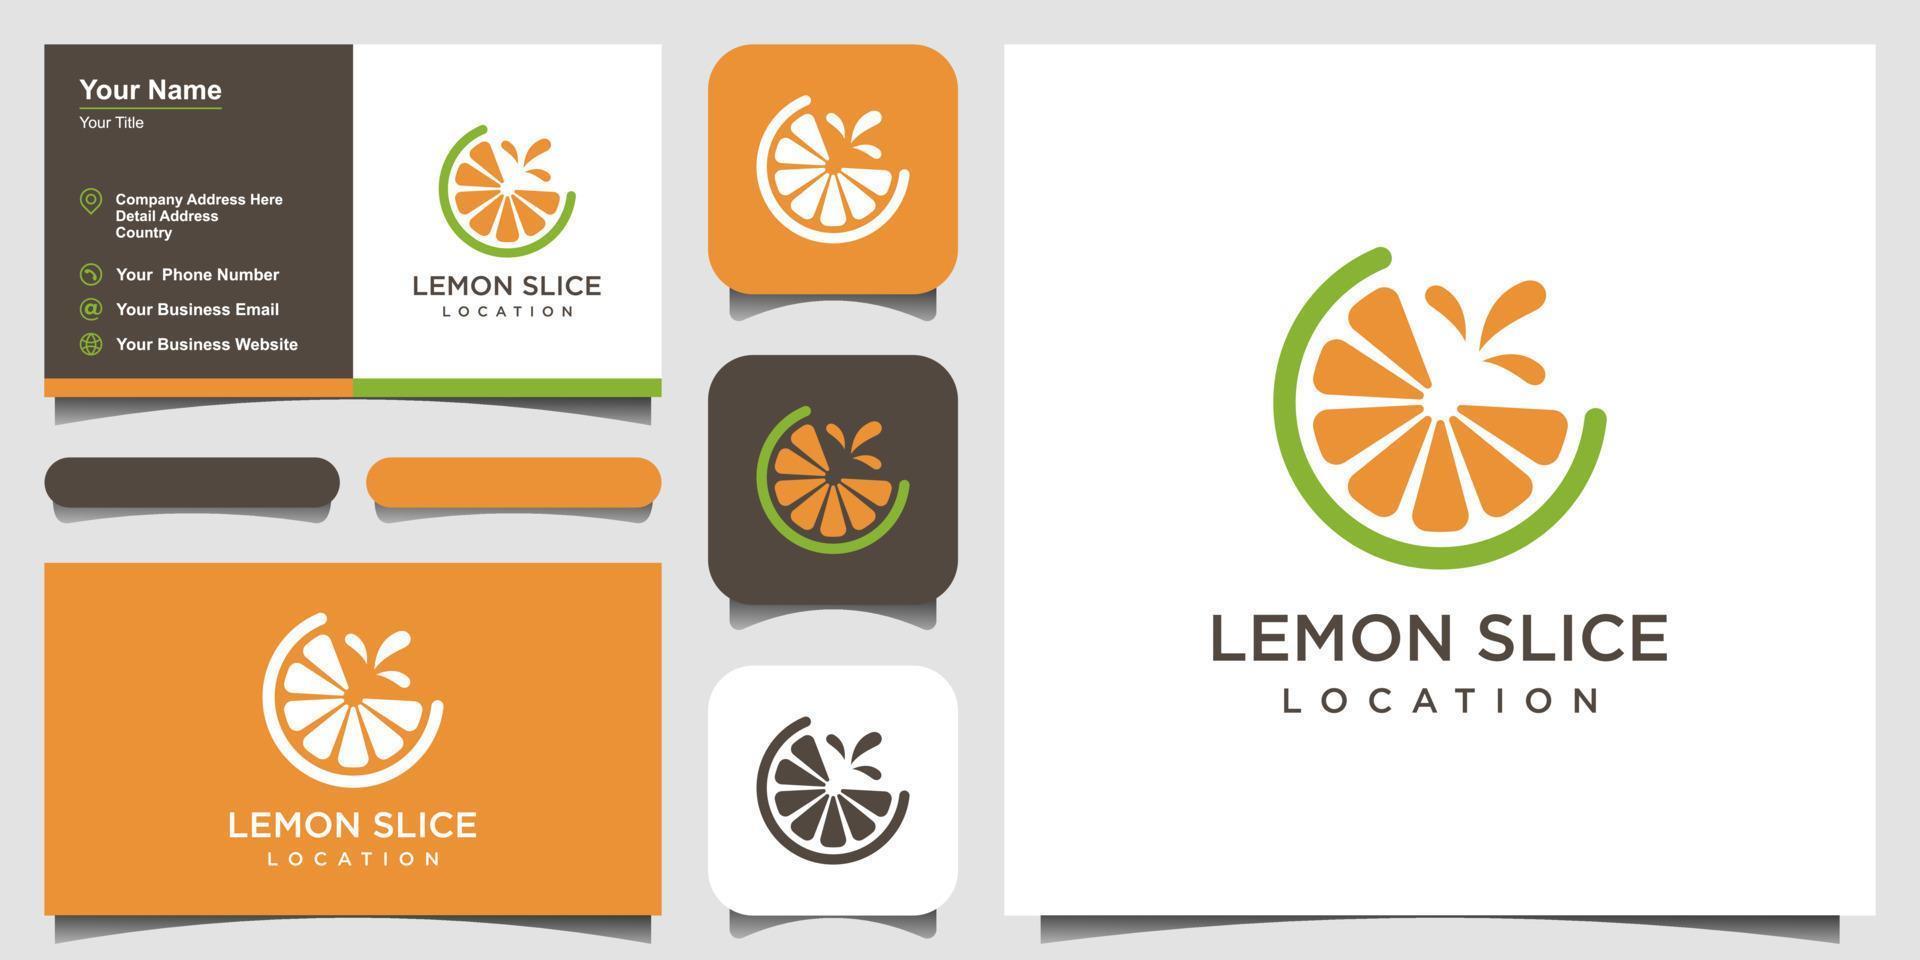 Lemon slice citrus flat vector logo and business card design